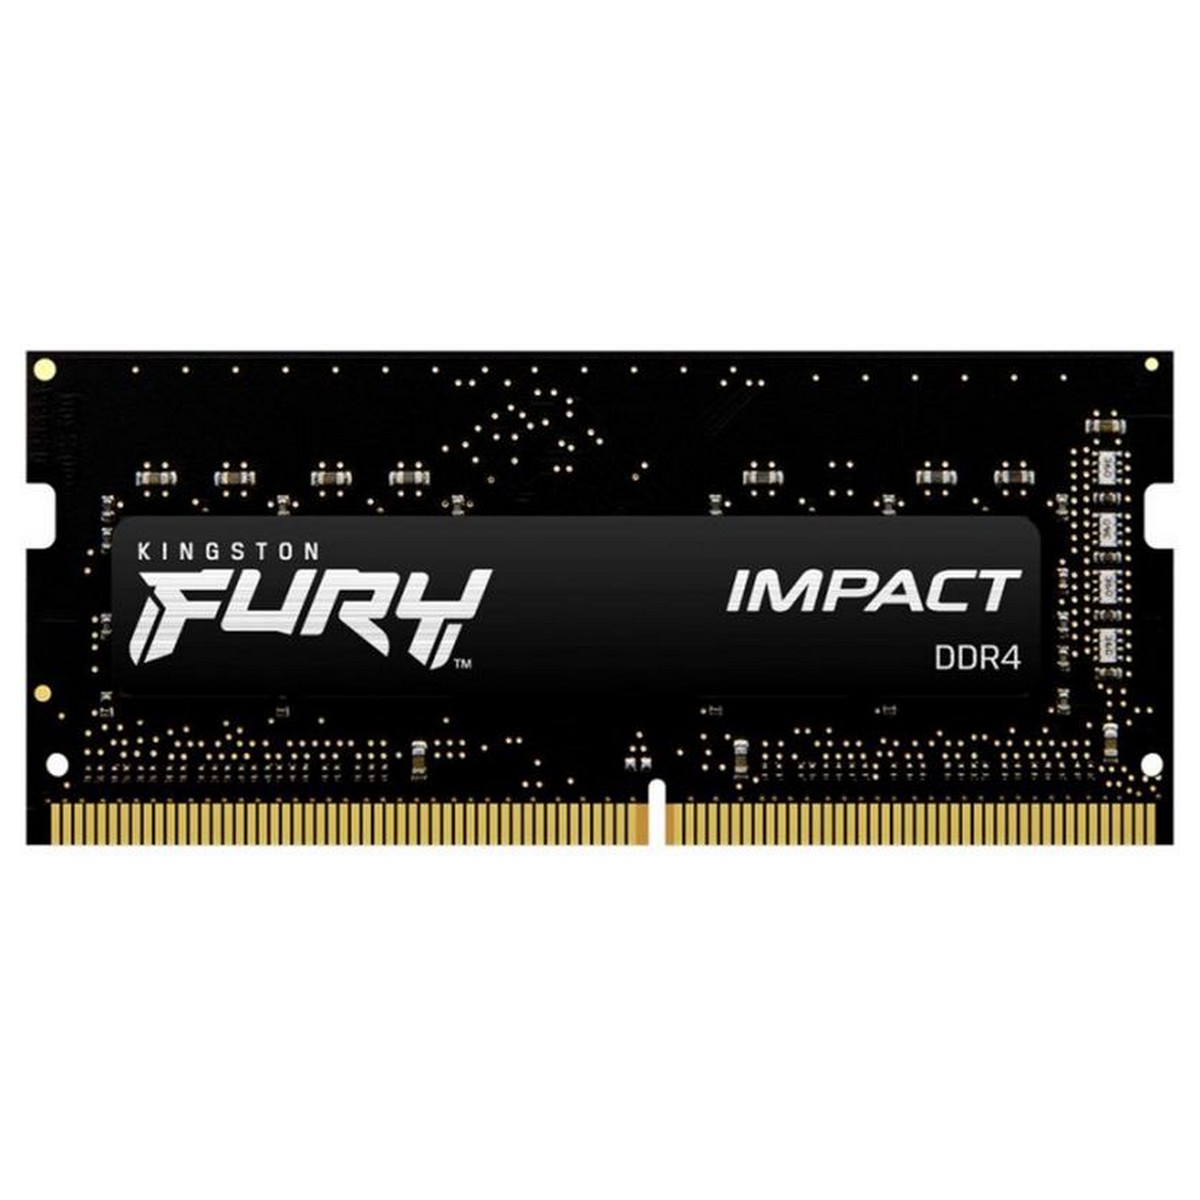 ОЗУ Kingston Fury Impact DDR4 SO-DIMM 16GB 3200 MHz (KF432S20IB 16)